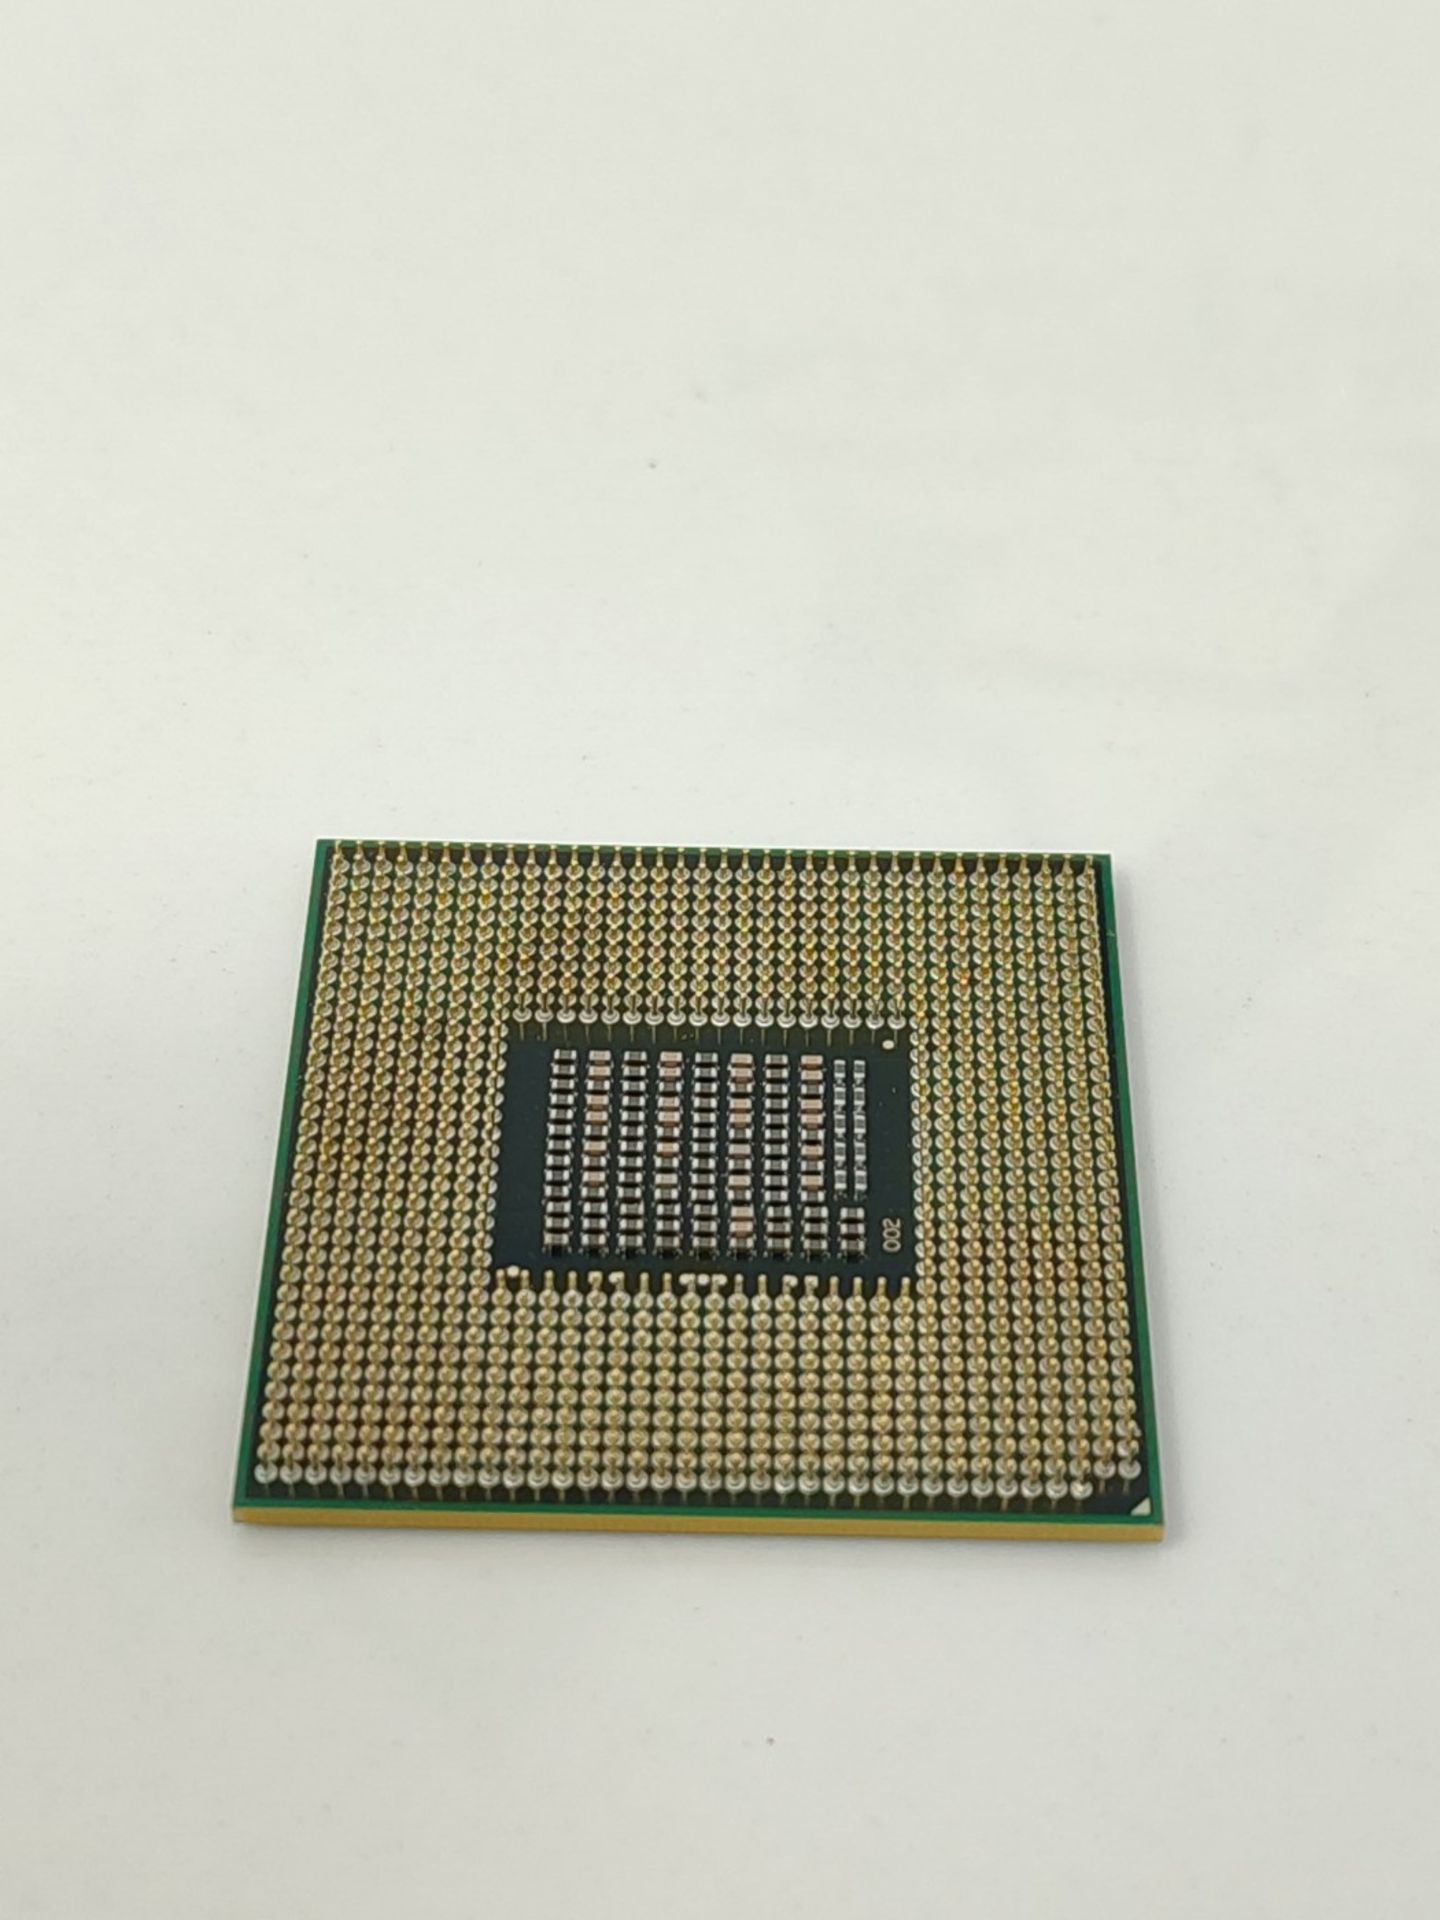 RRP £200.00 Intel Core i7 2630QM SR02Y Quad Core 2.0GHz 6MB FCPGA988 Notebook Processor - Image 2 of 2